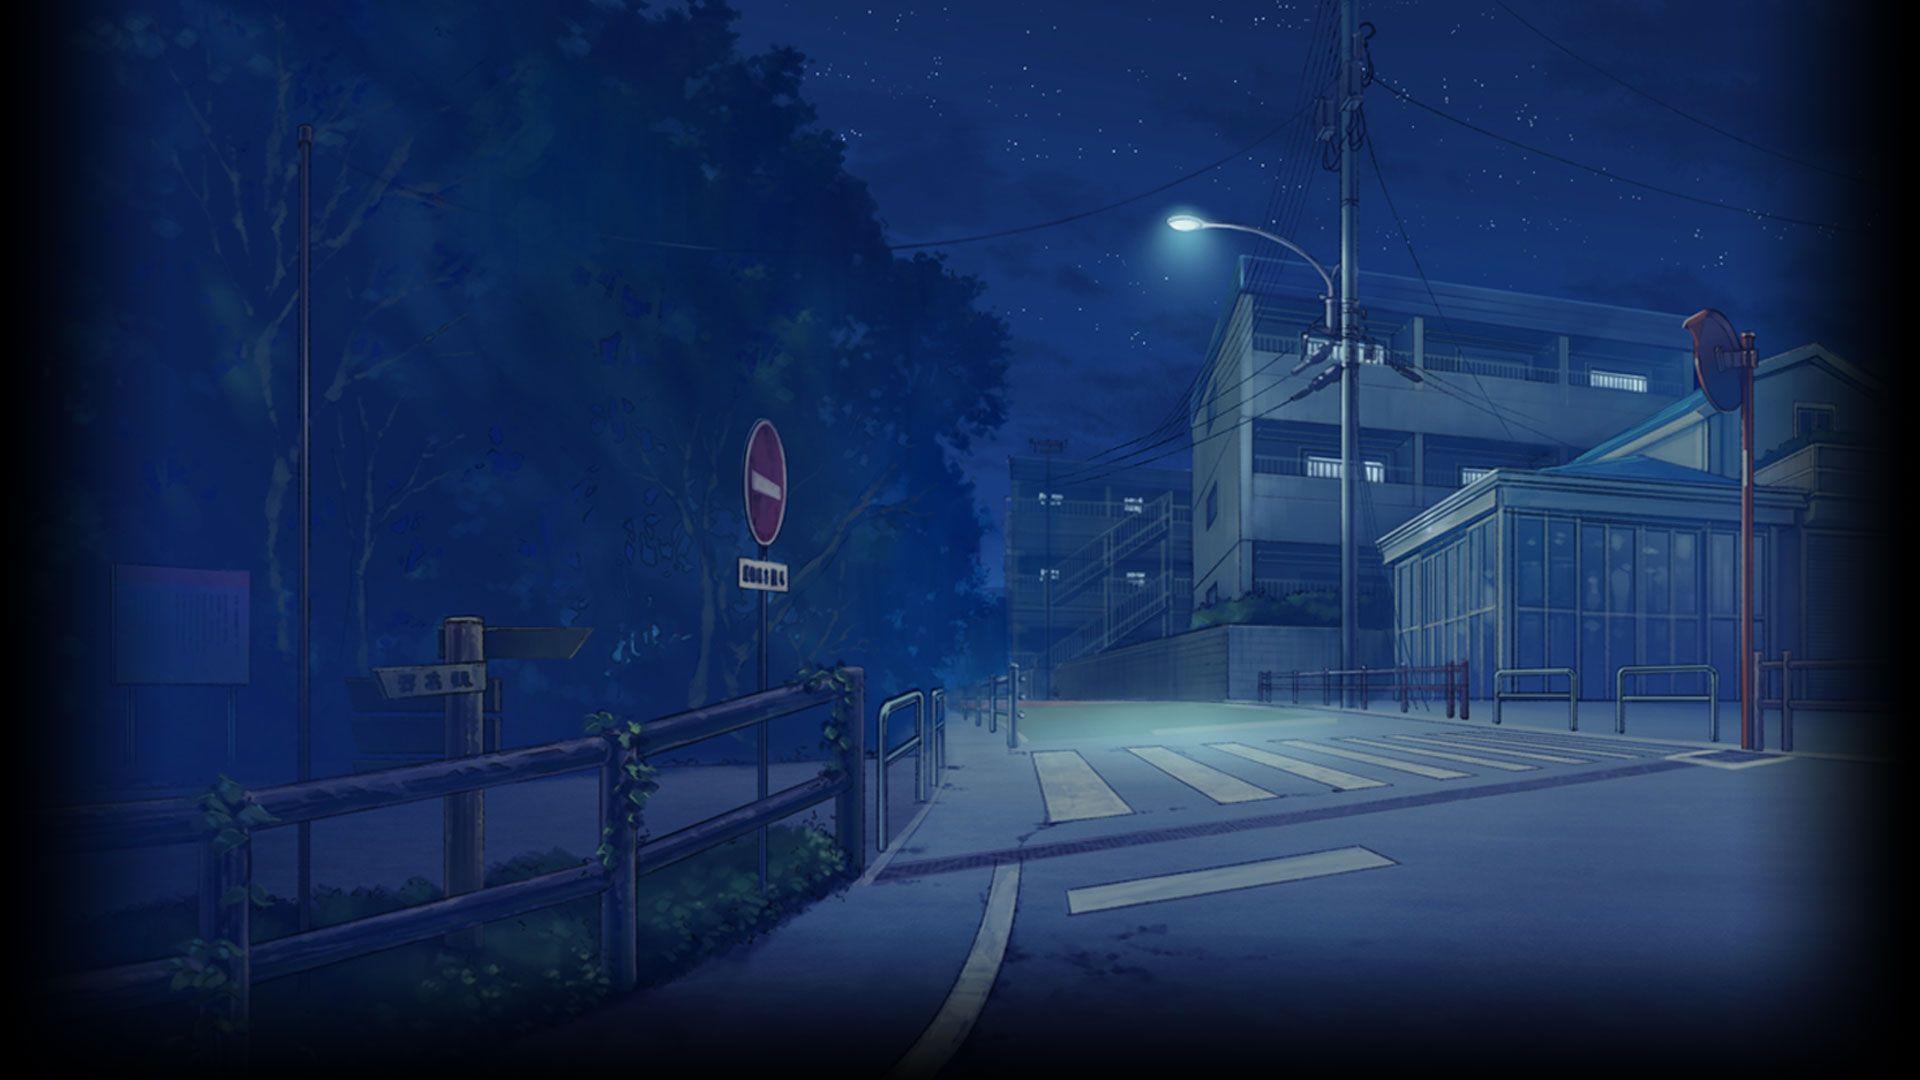 Anime City Night Scenery Wallpapers - Top Free Anime City ...